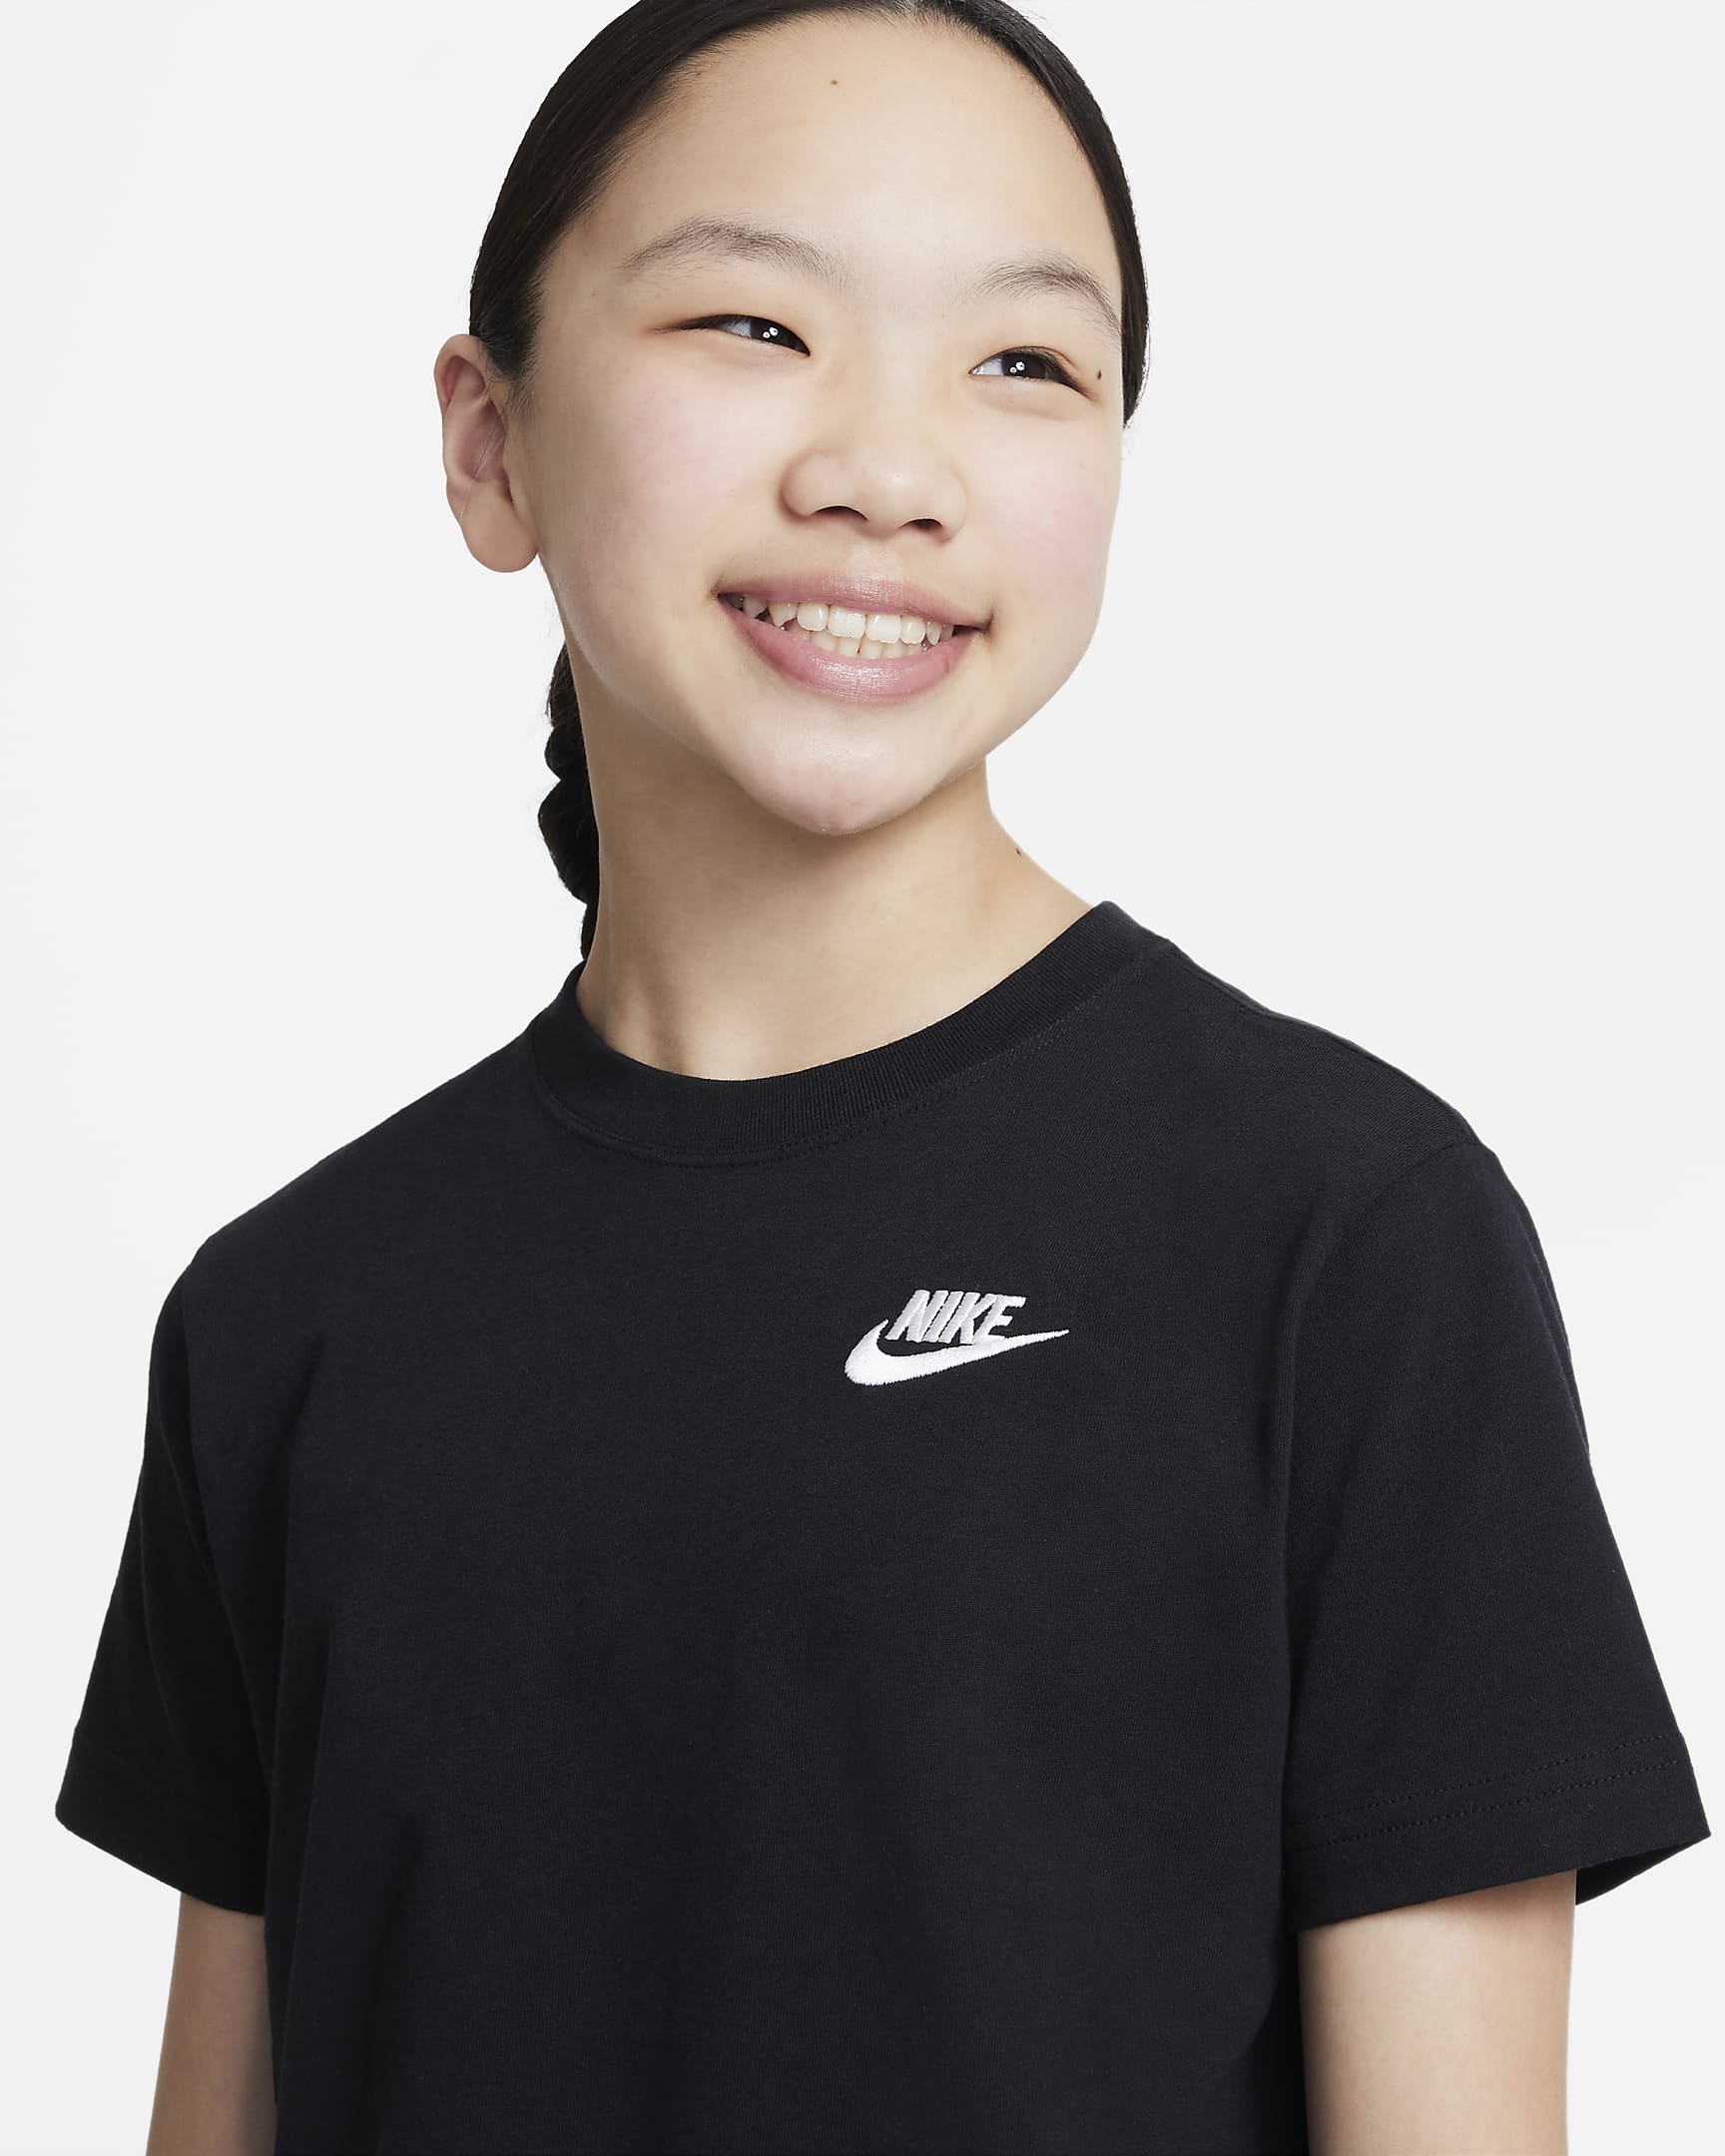 Nike Sportswear Older Kids' (Girls') T-Shirt - Black/White